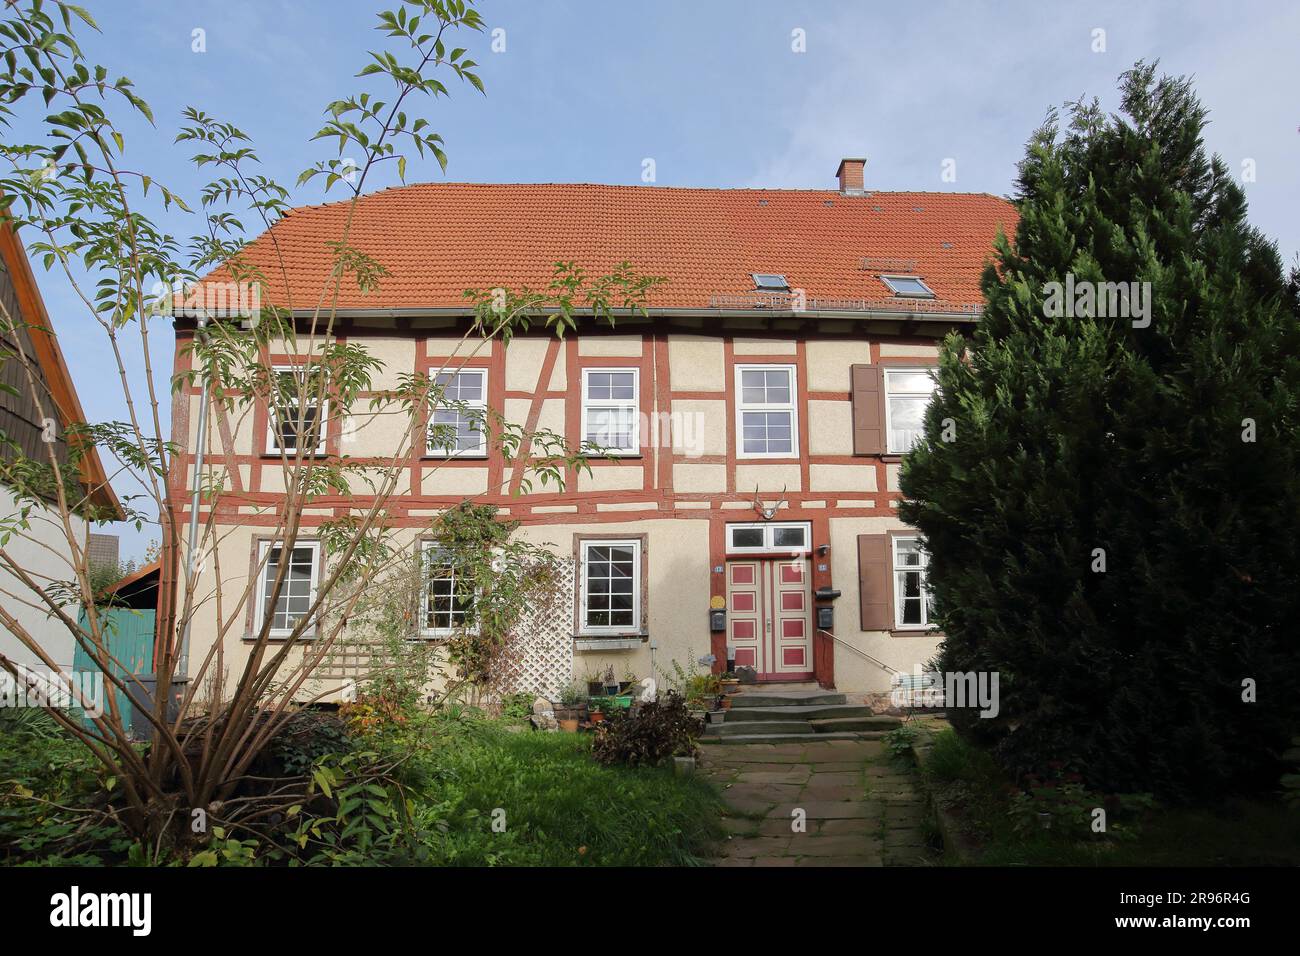 Storica scuola luterana e casa a graticcio, LuSchluechtern, Vogelsberg, Assia, Germania Foto Stock